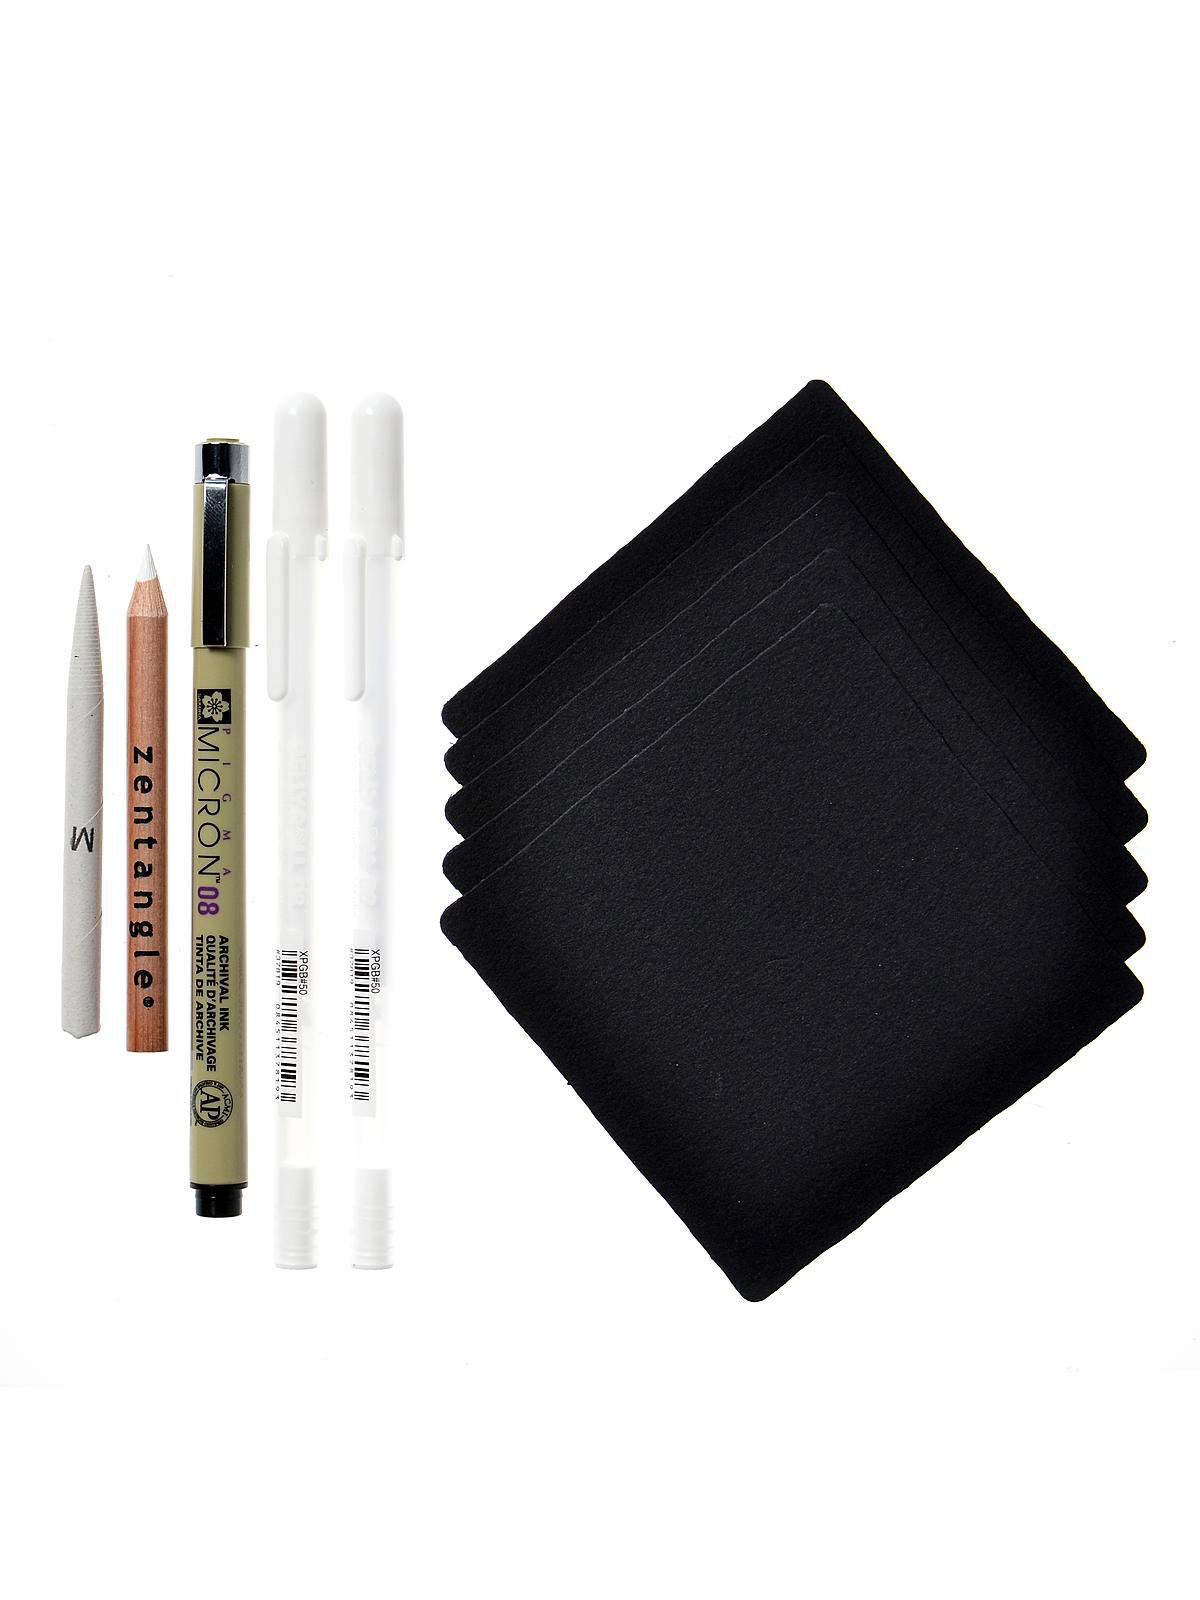  Sakura Zentangle Tool Set - 5 Black Micron Pens, 1 Black  Graphite Pencil, 1 Tortillion, 5 3.5 White Paper Tiles - White Zentangle  Tiles - 12 Piece Set